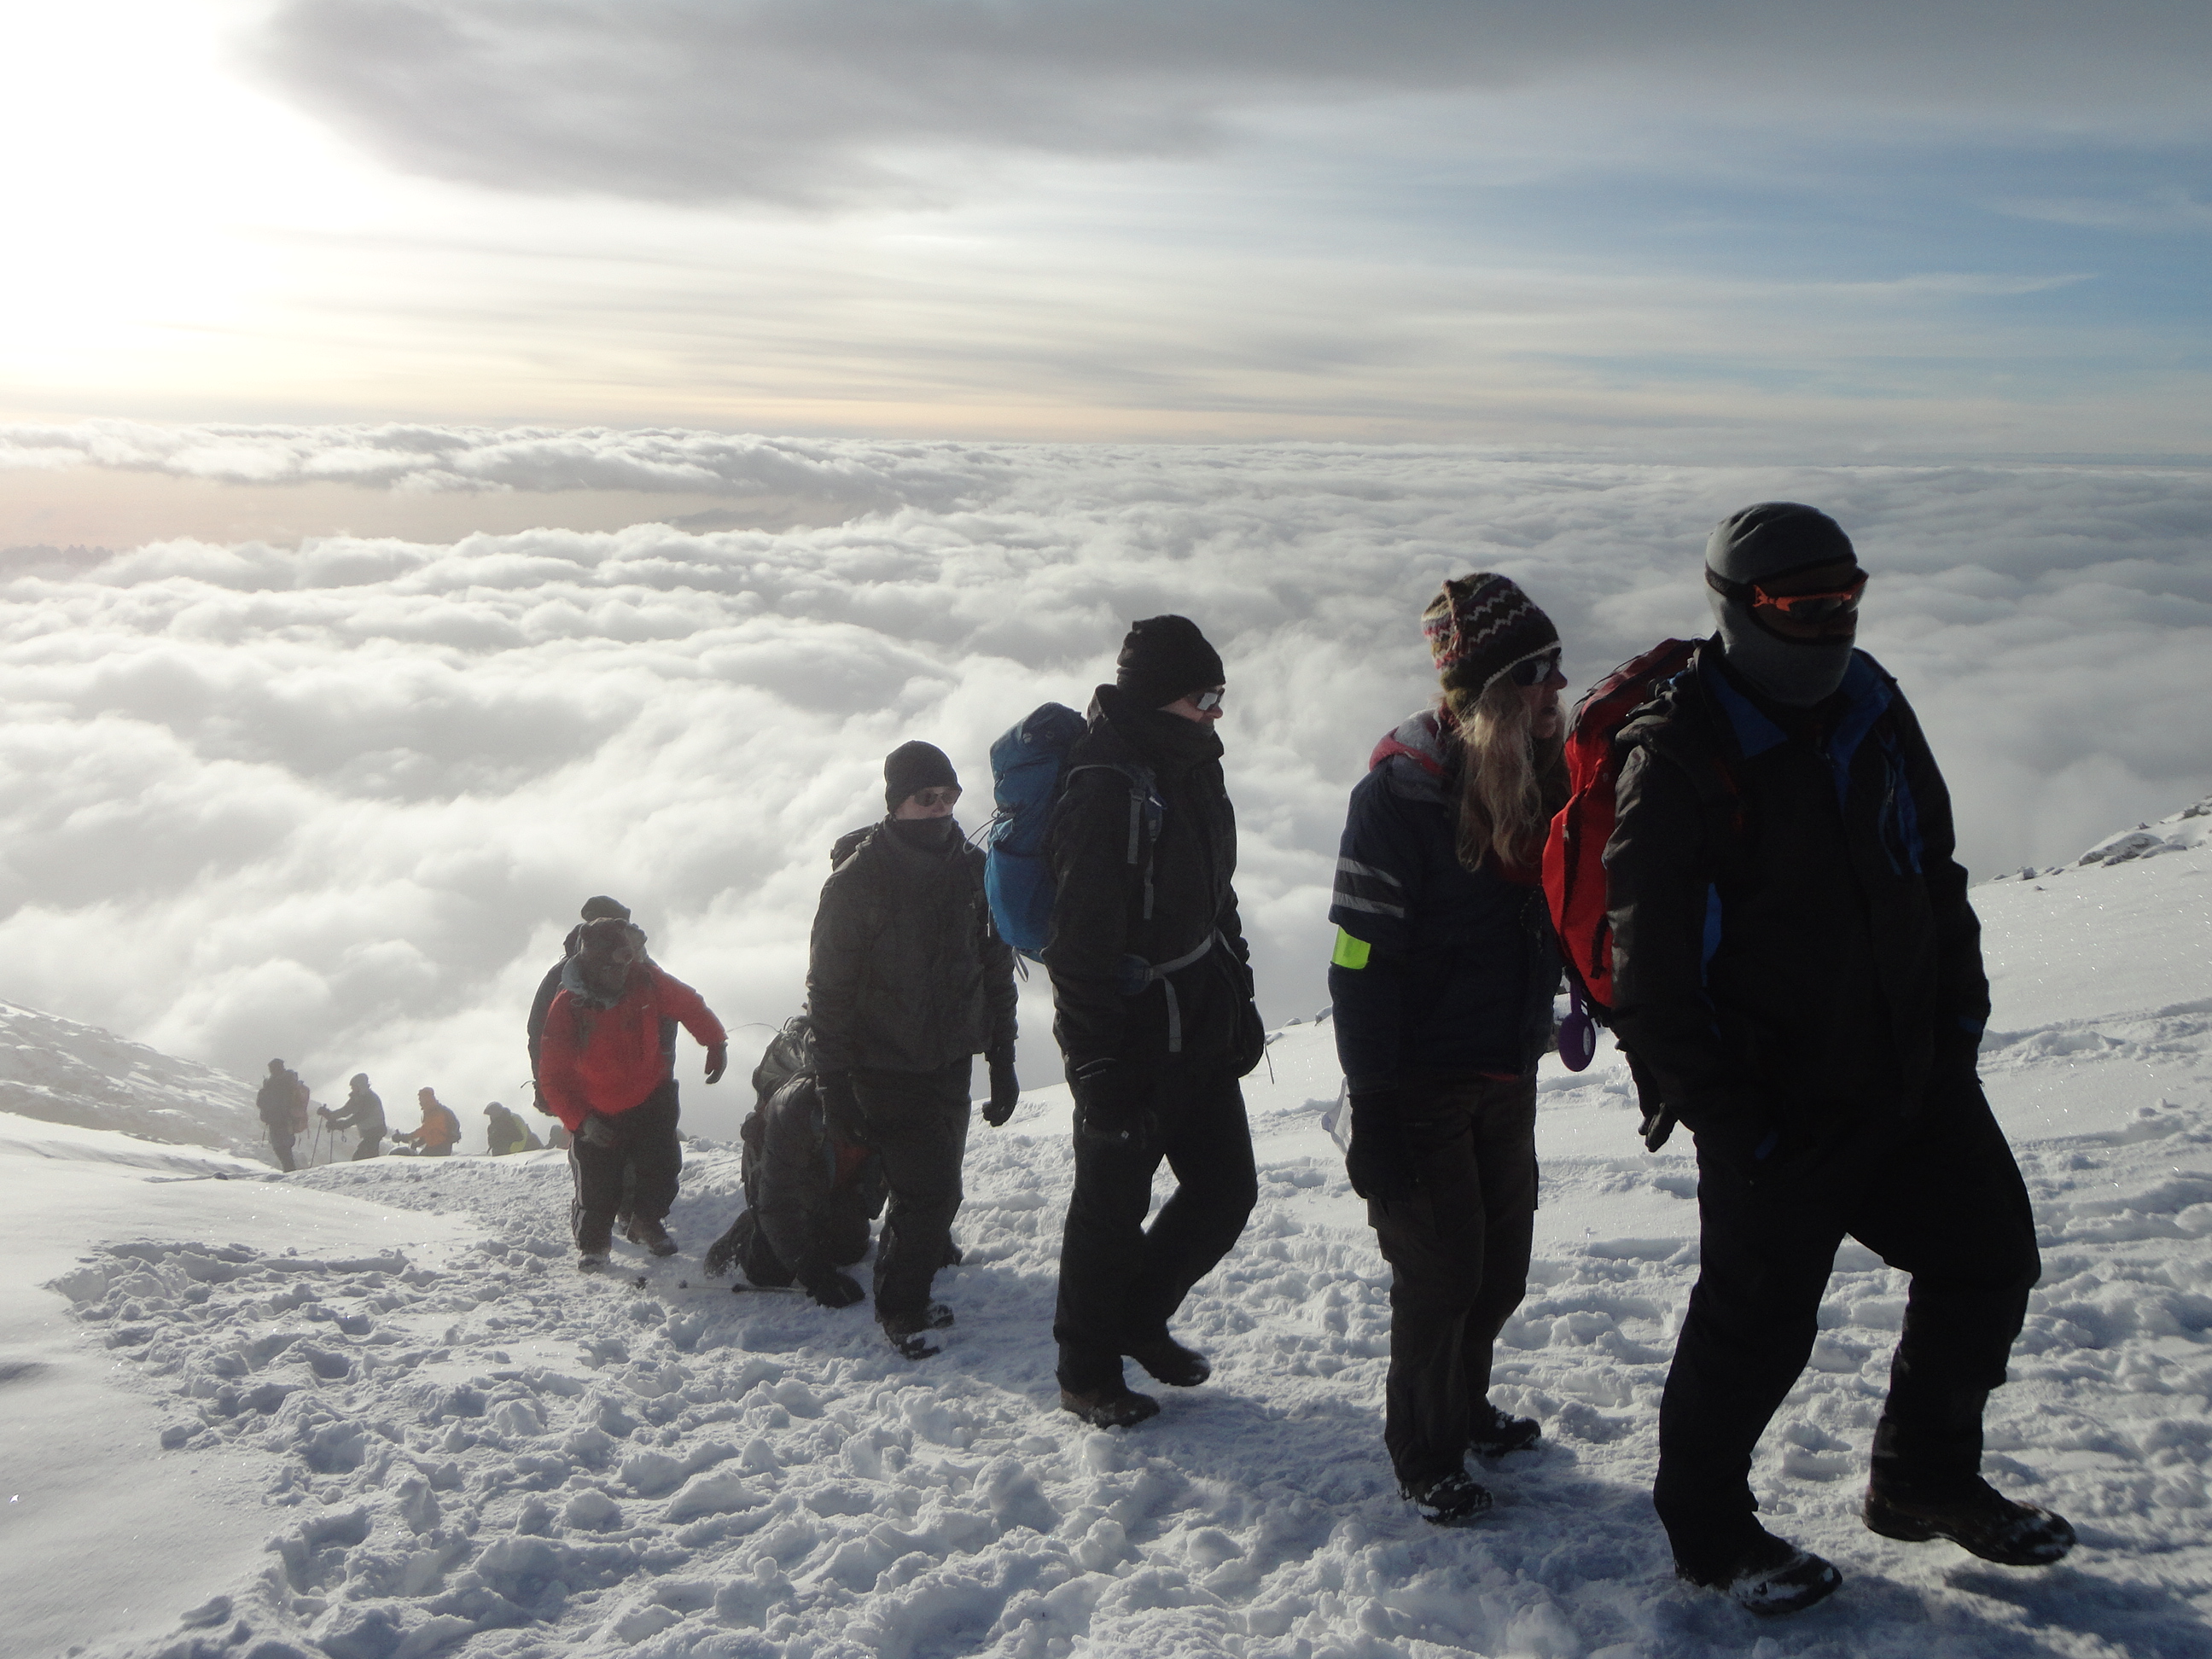 Walking towards the Summit of Kilimanjaro